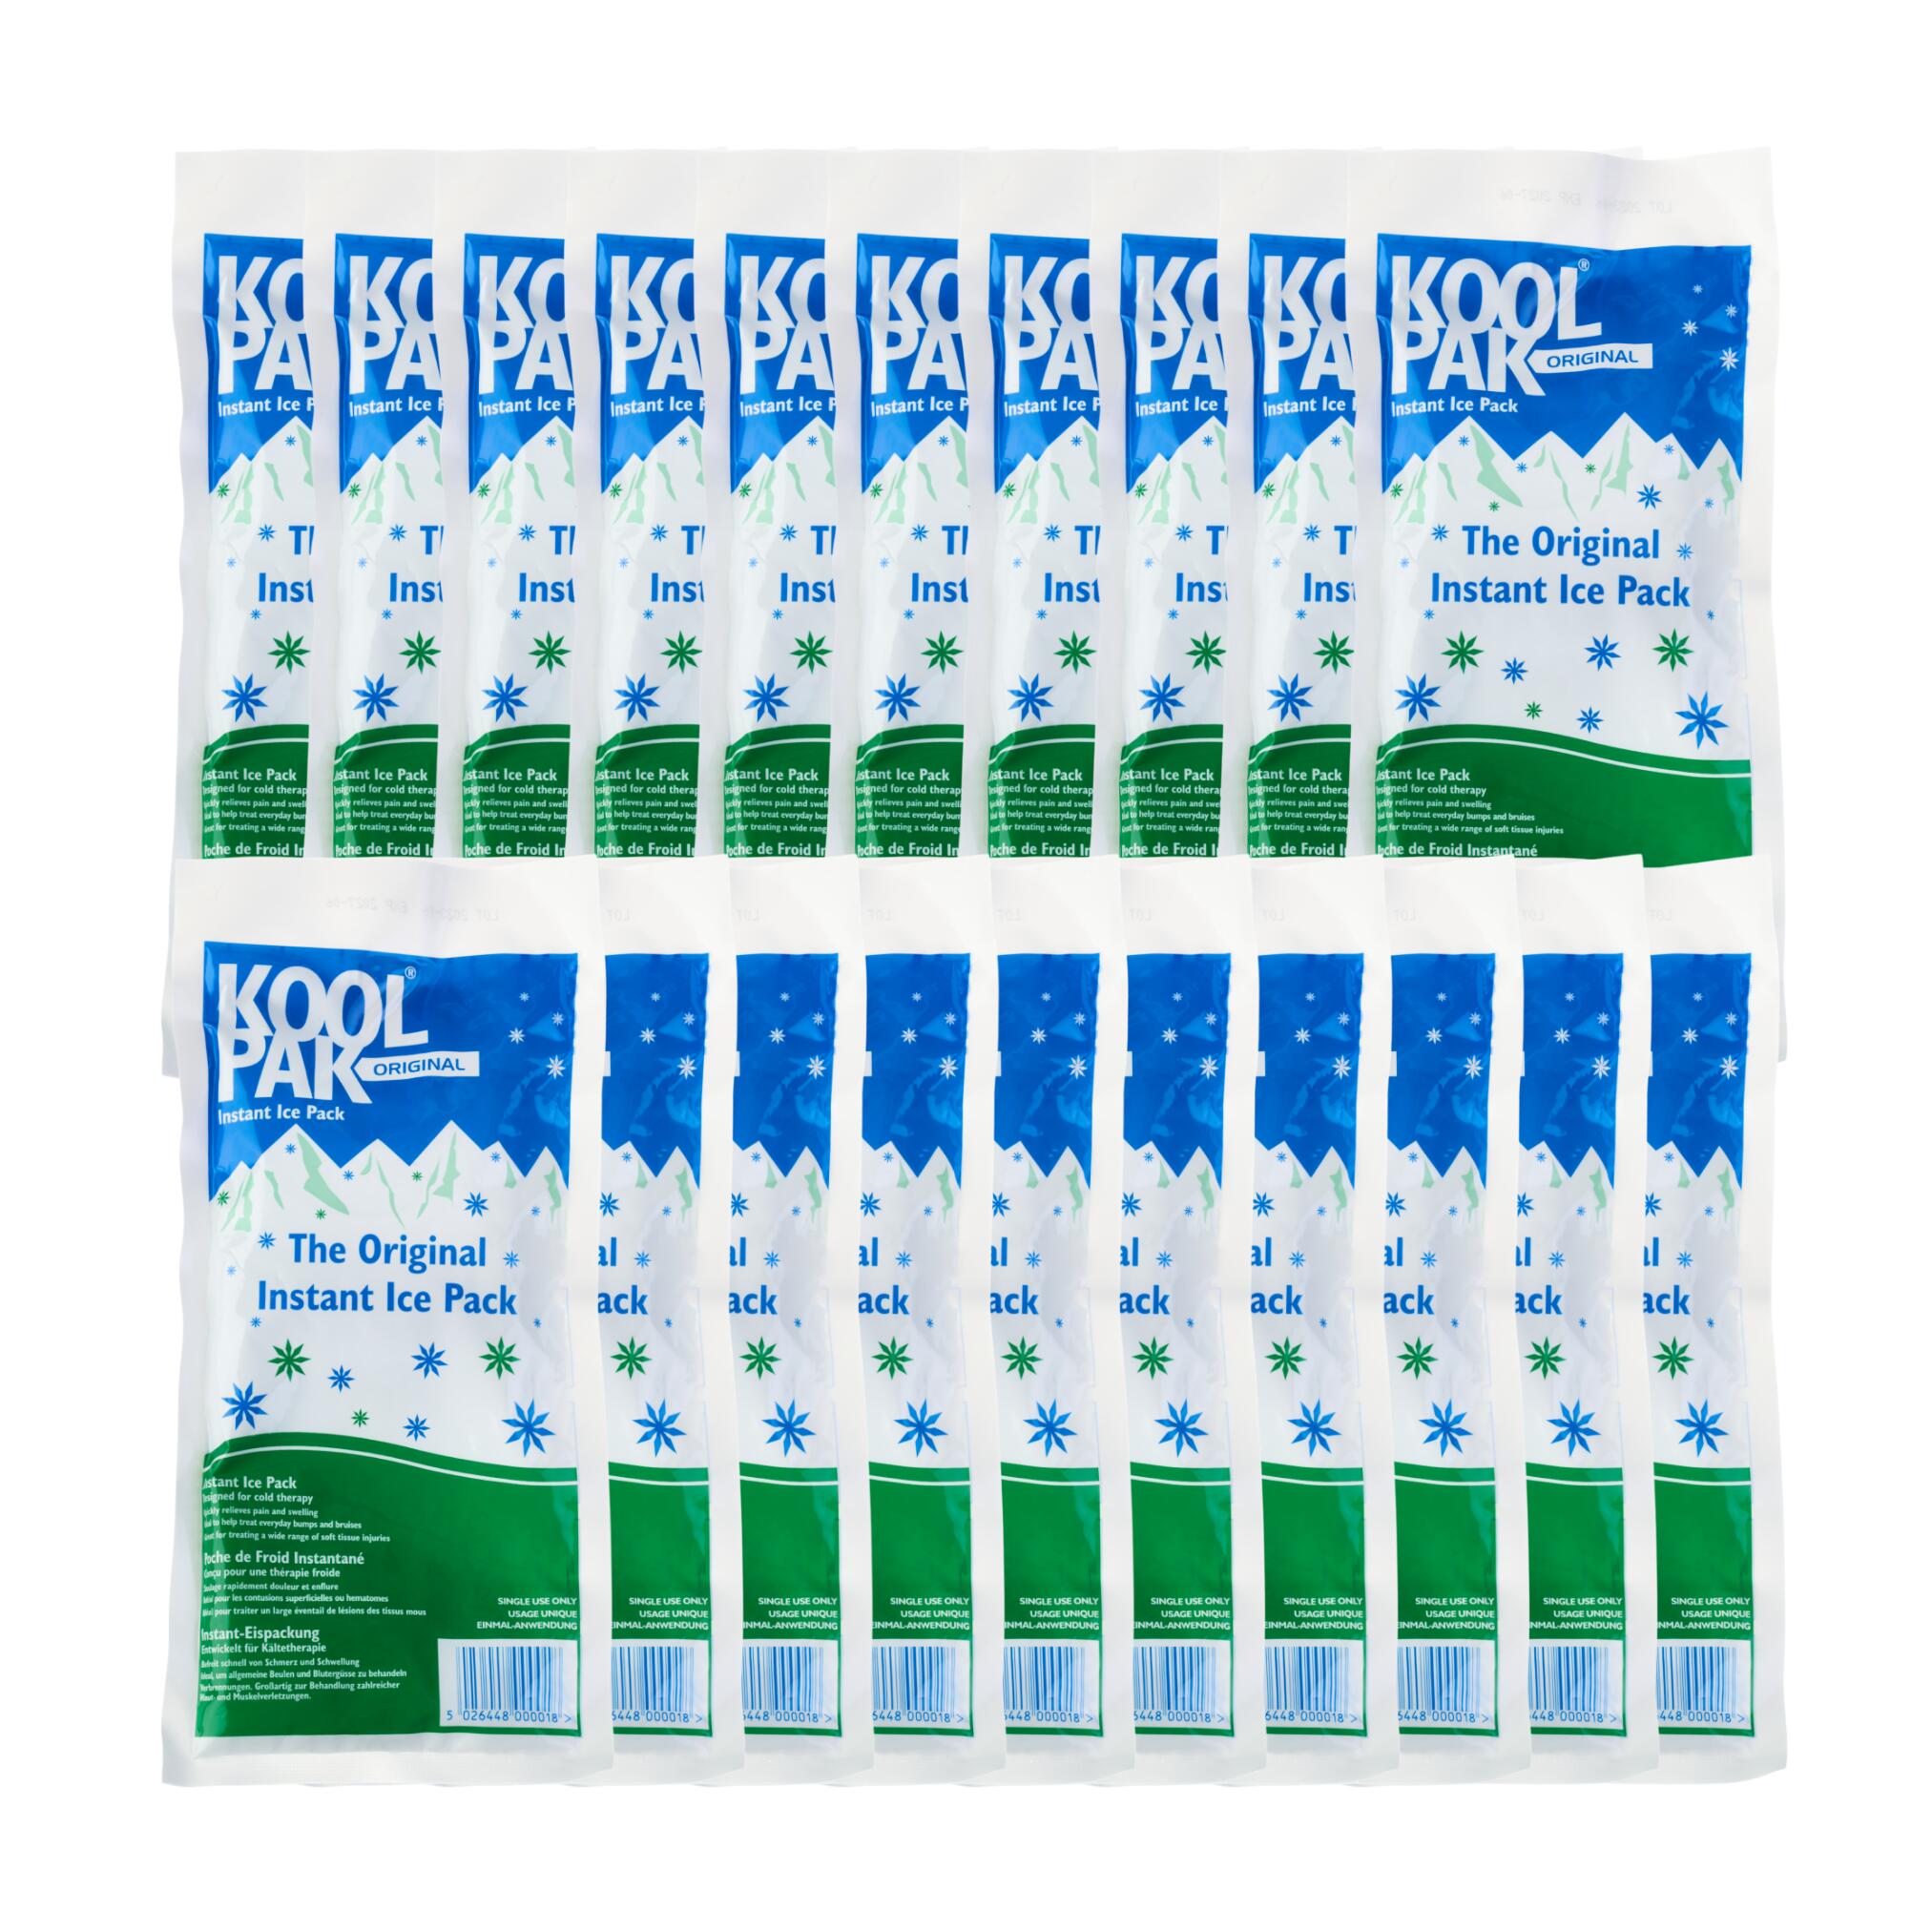 Koolpak Original Instant Ice Pack - 12 x 29cm - Pack of 20 1/7